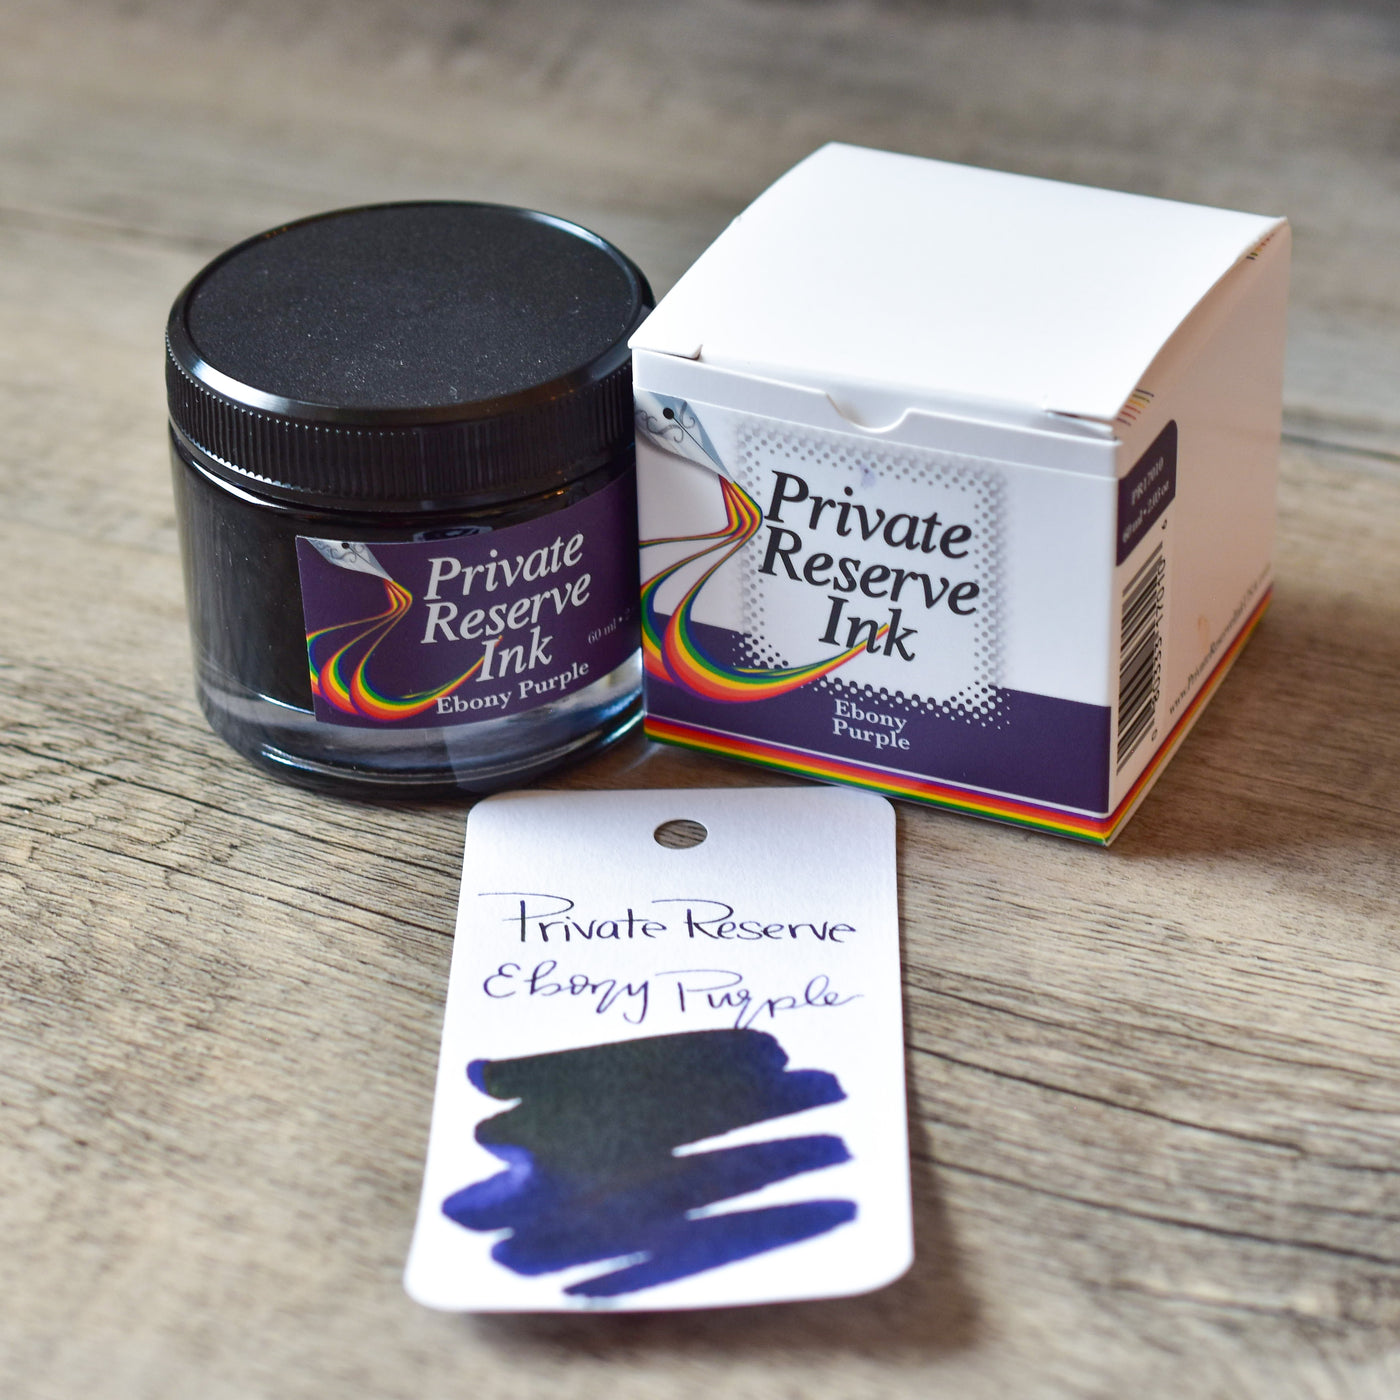 Private Reserve Ebony Purple Ink Bottle